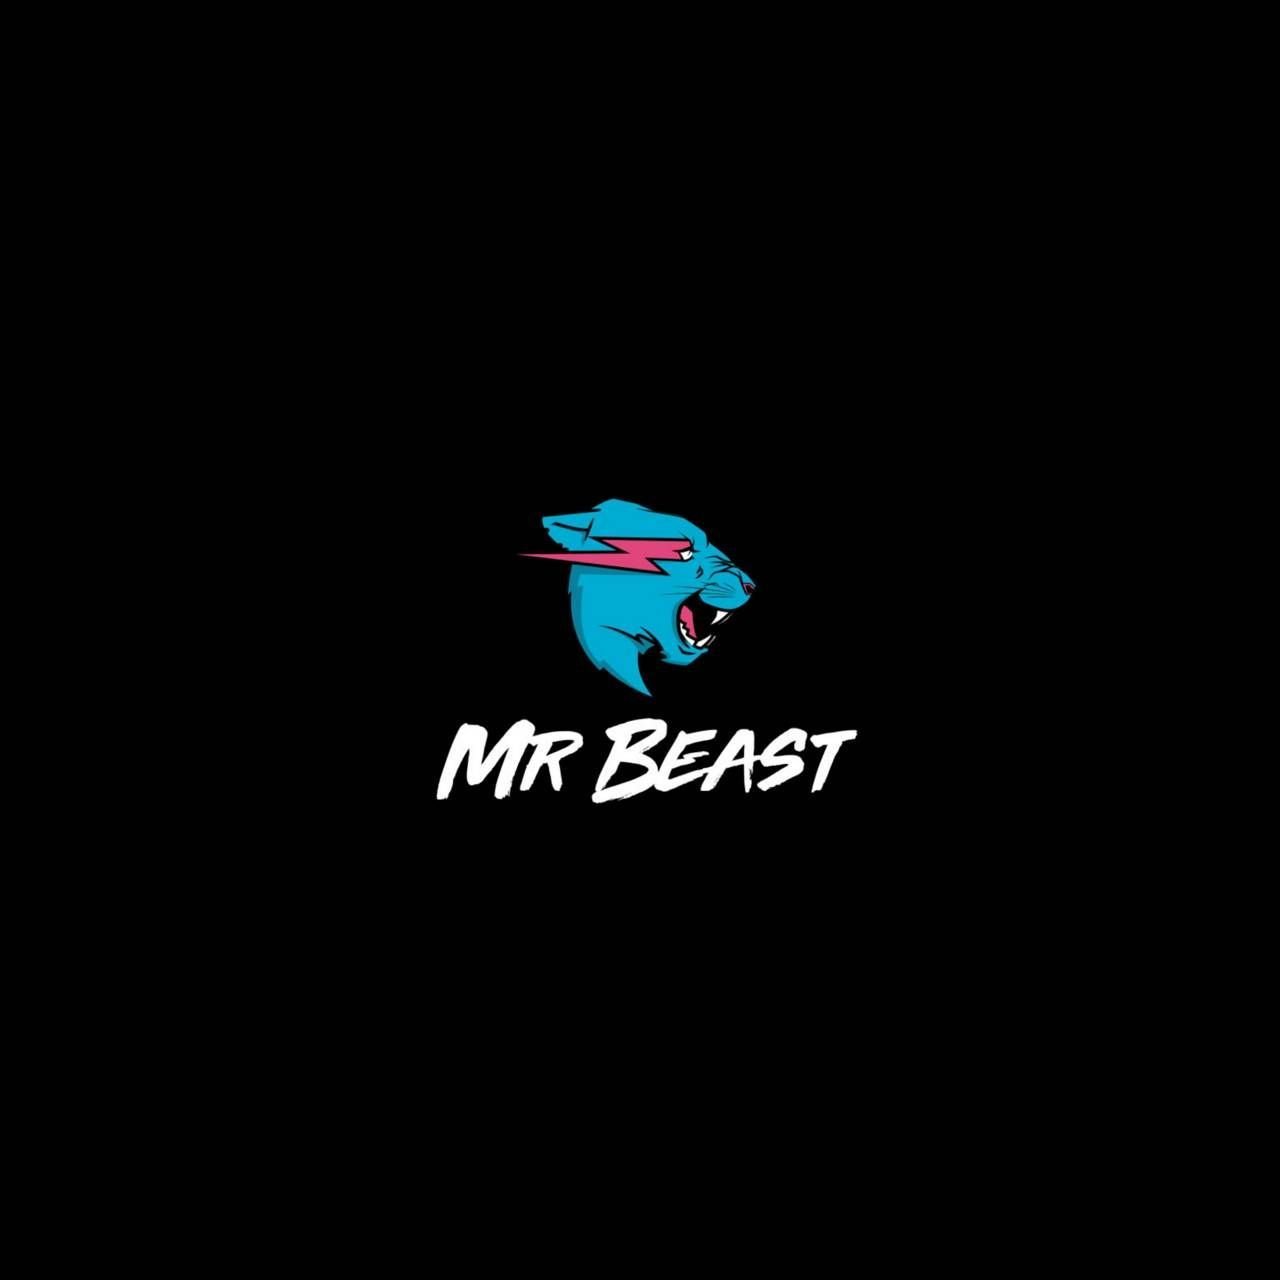 Mr. Beast Logo Black Background